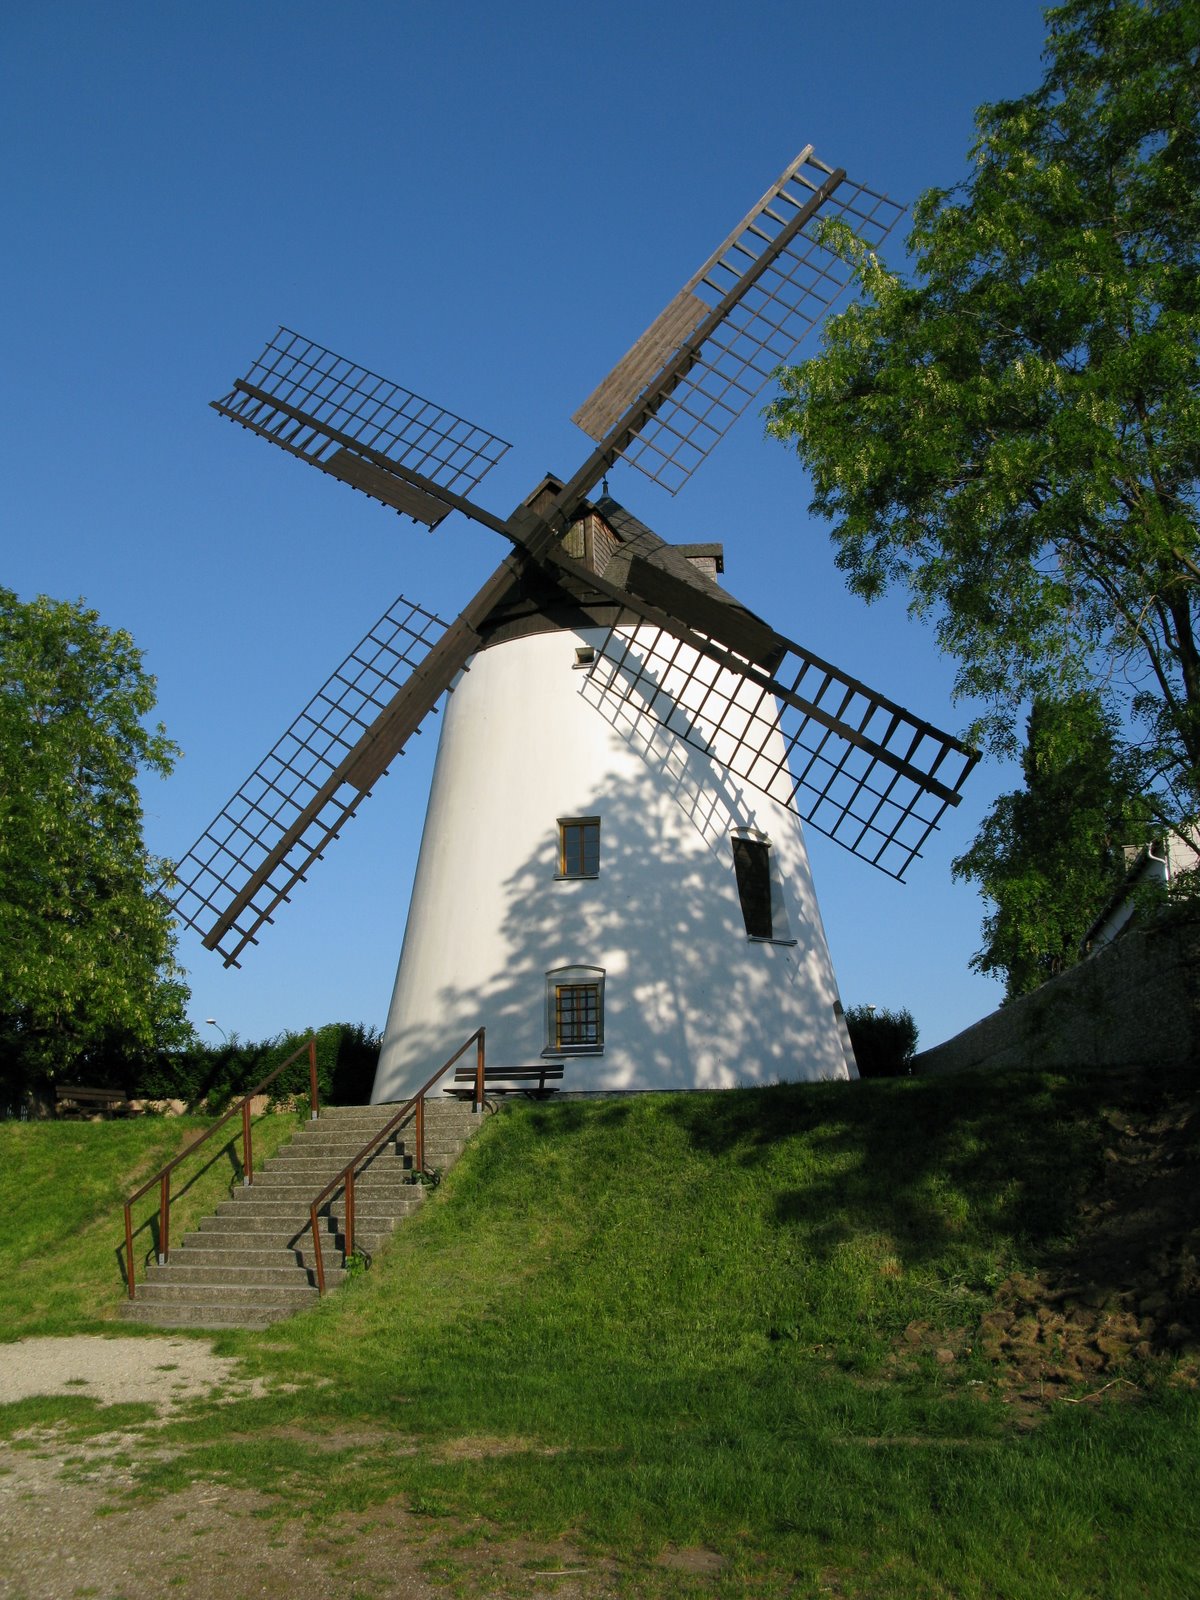 Image of a Dutch windmill